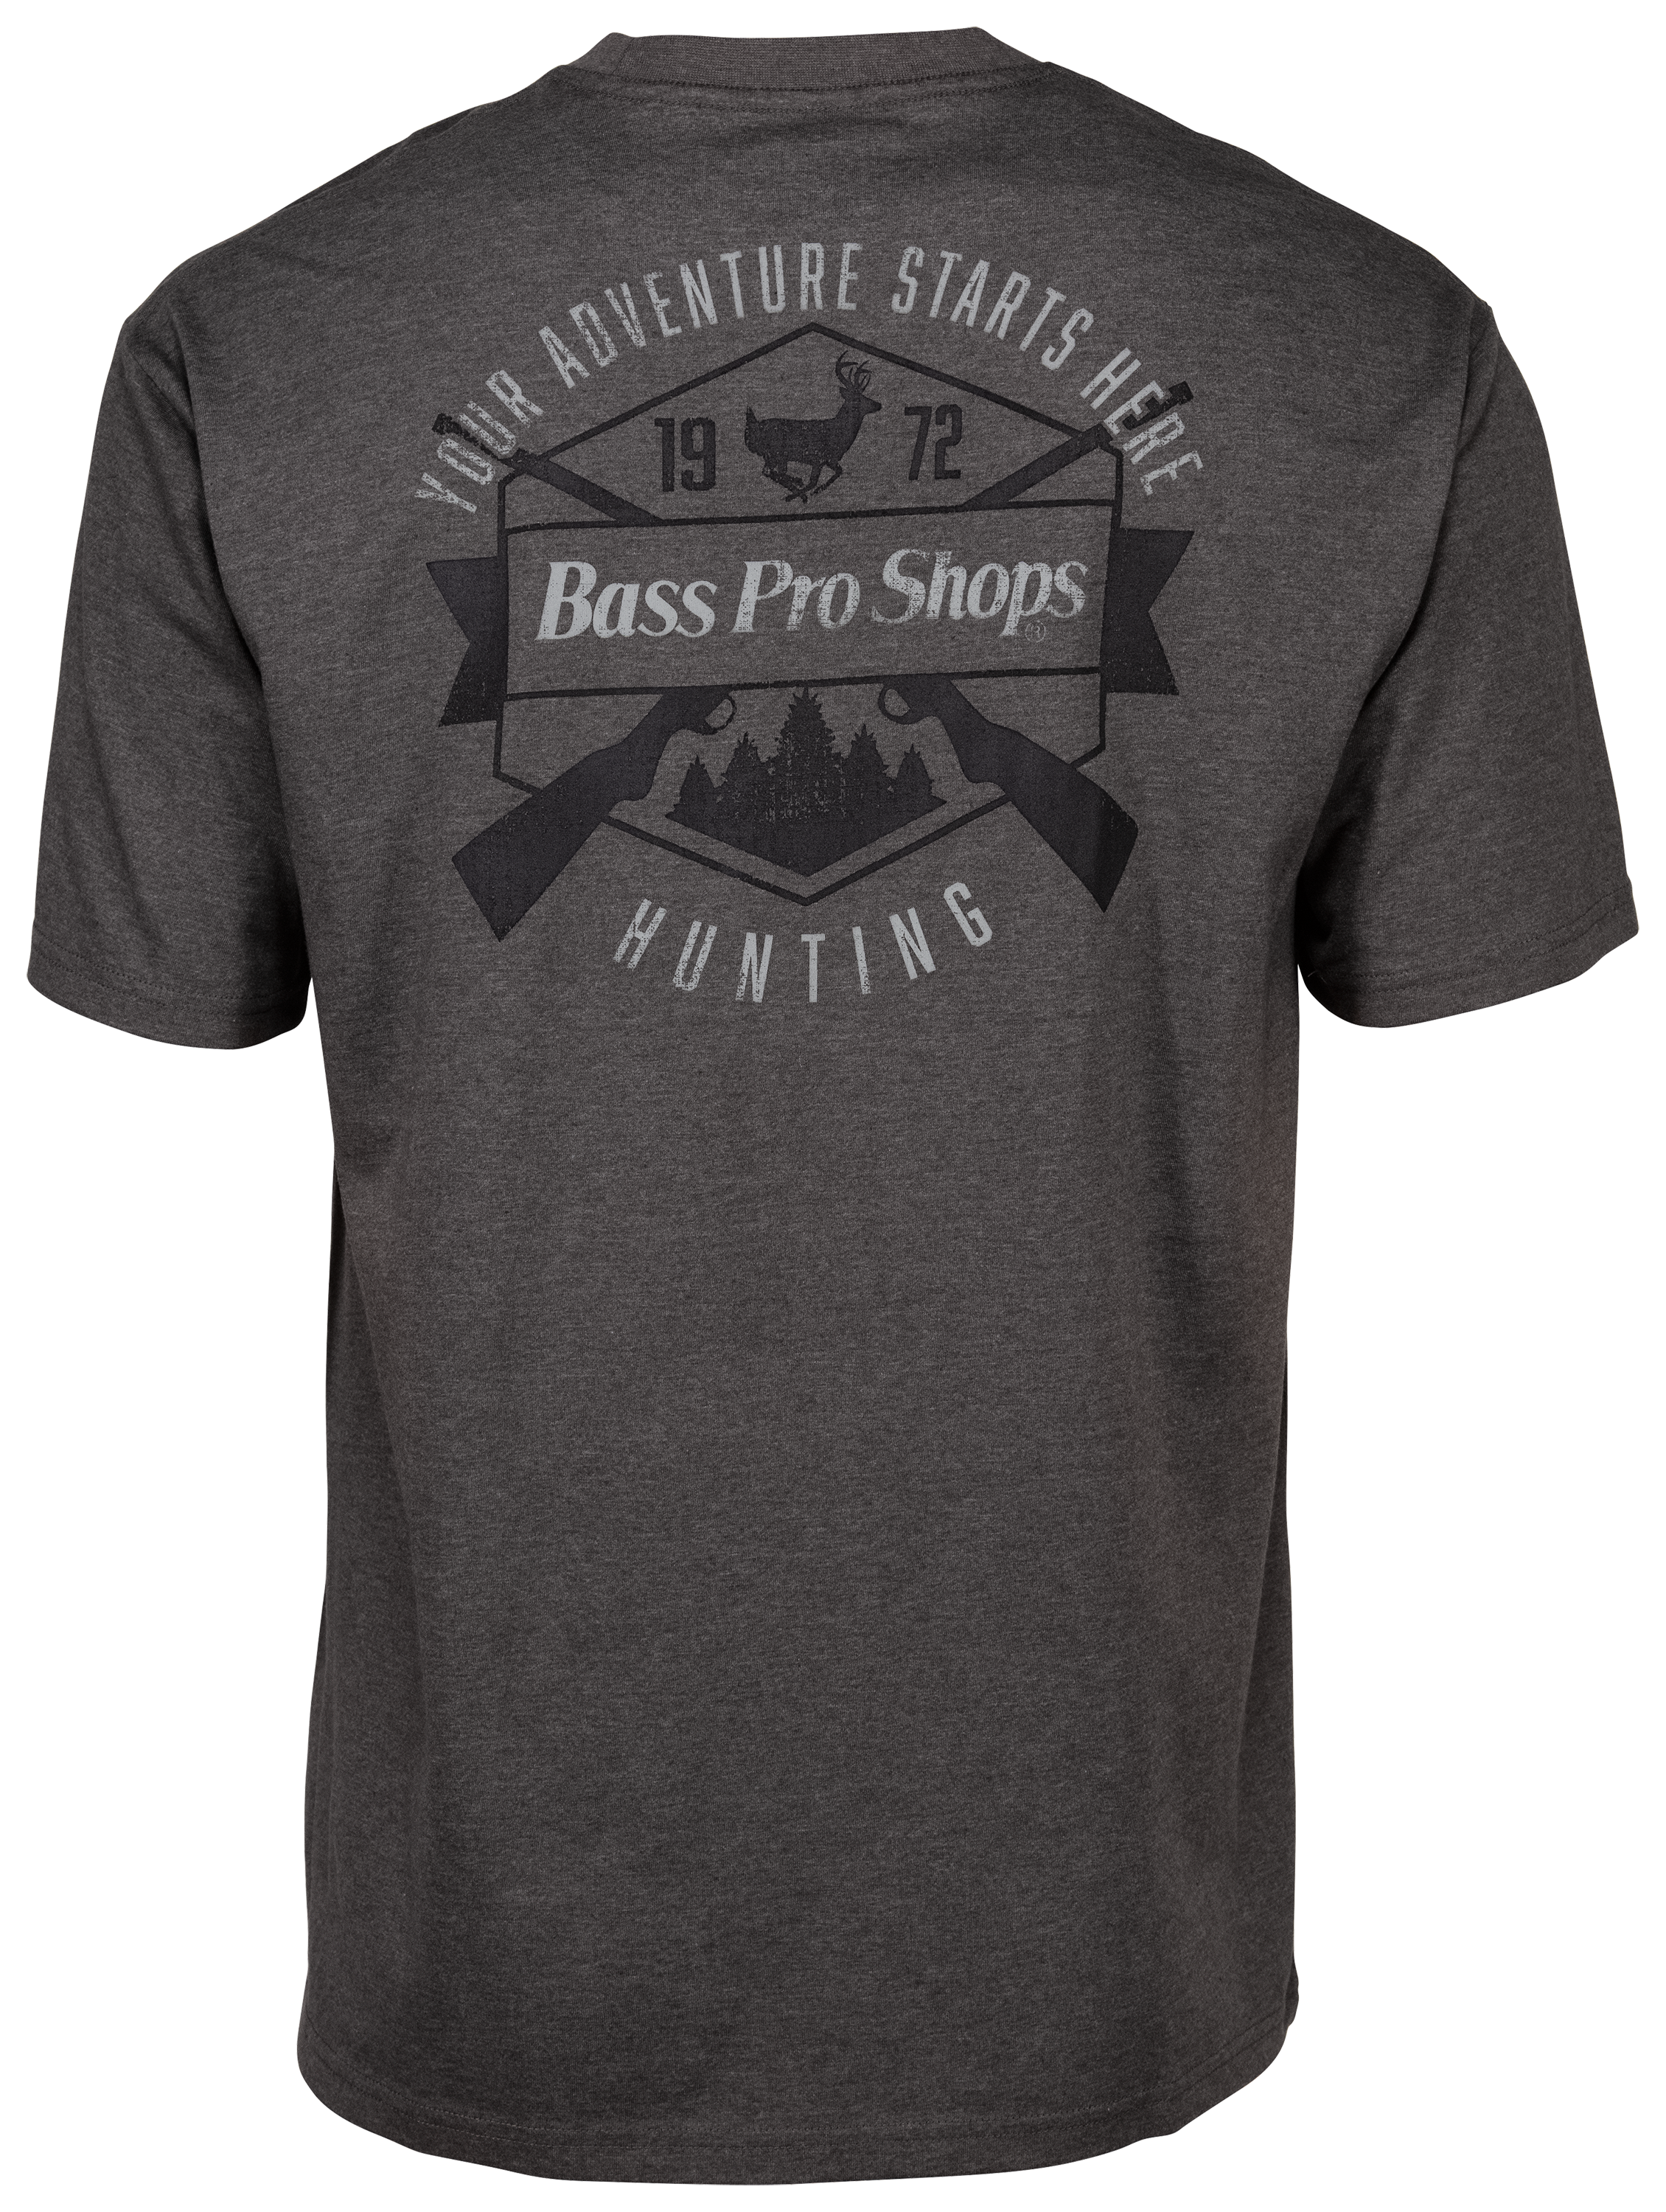 Bass Pro Shops Hunt Club Short-Sleeve T-Shirt for Men | Bass Pro Shops